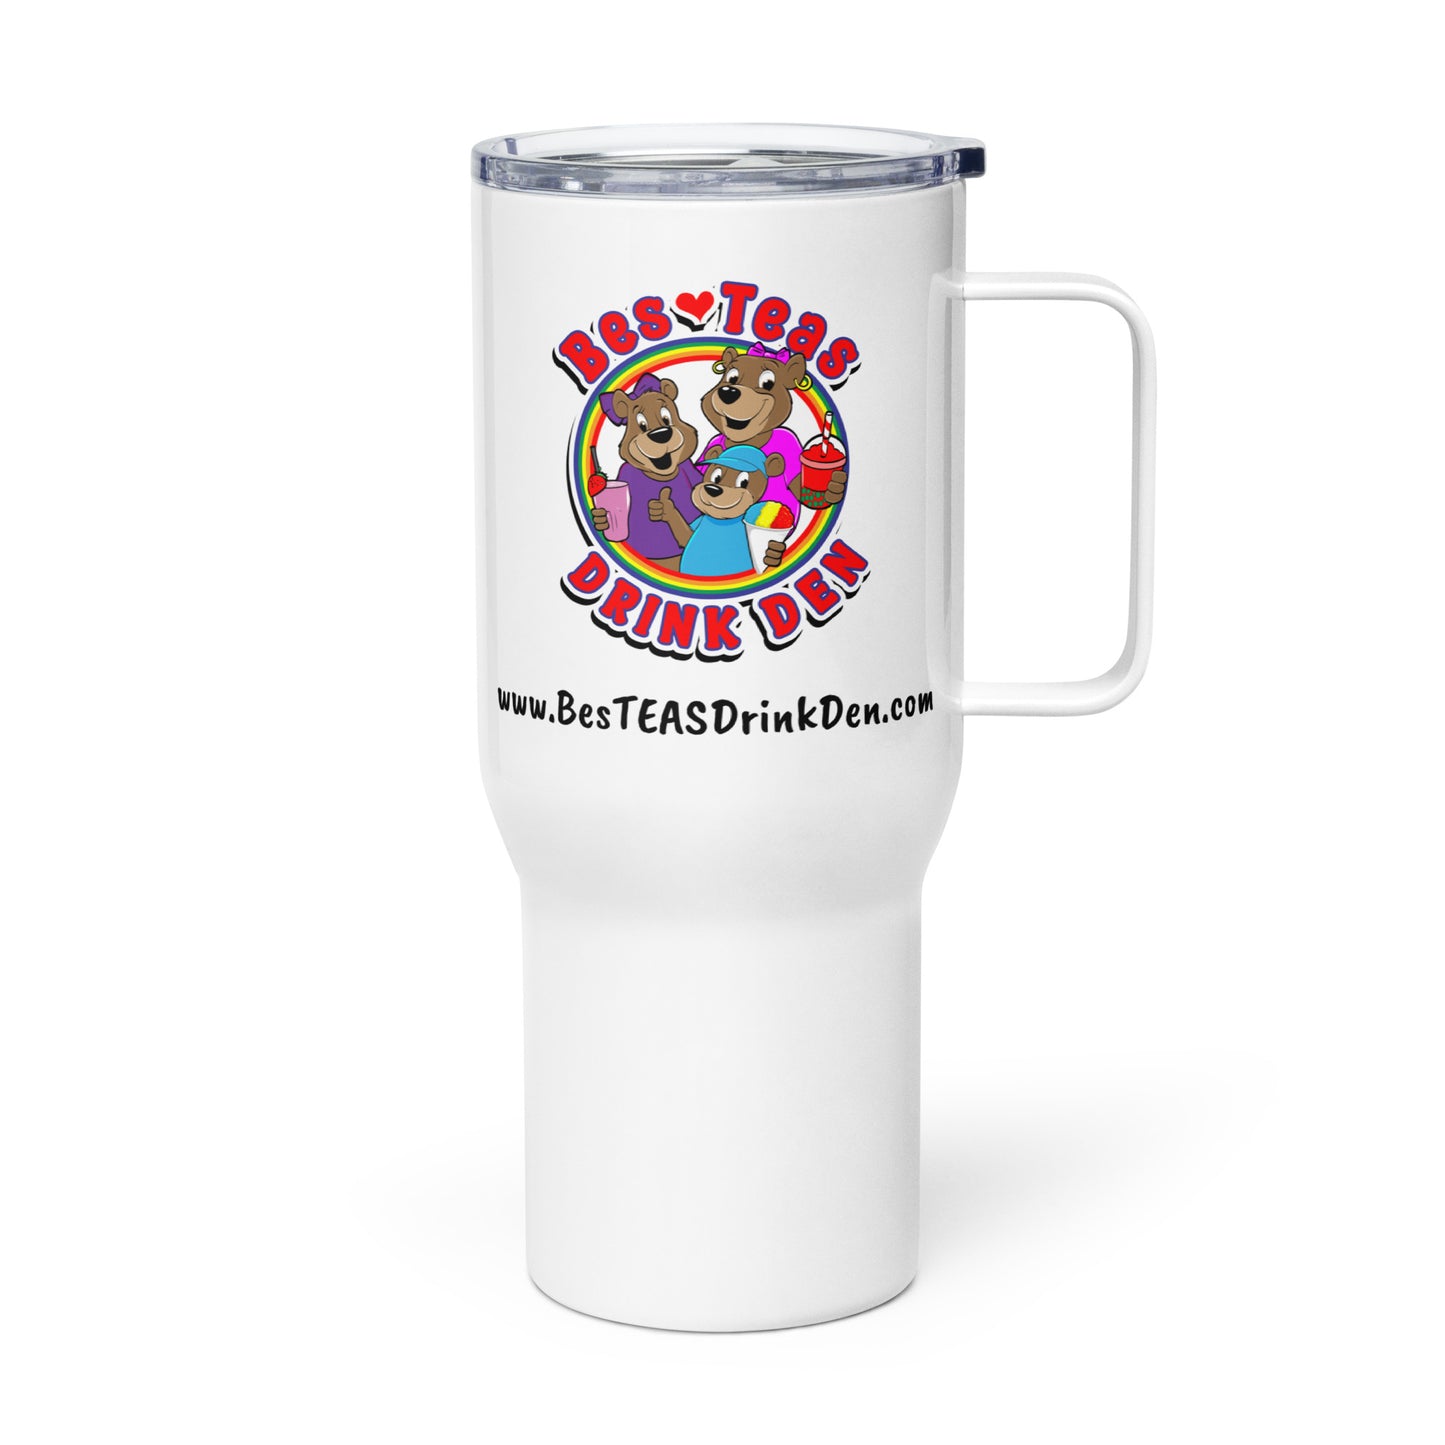 BesTEAS Drink Den Travel Mug